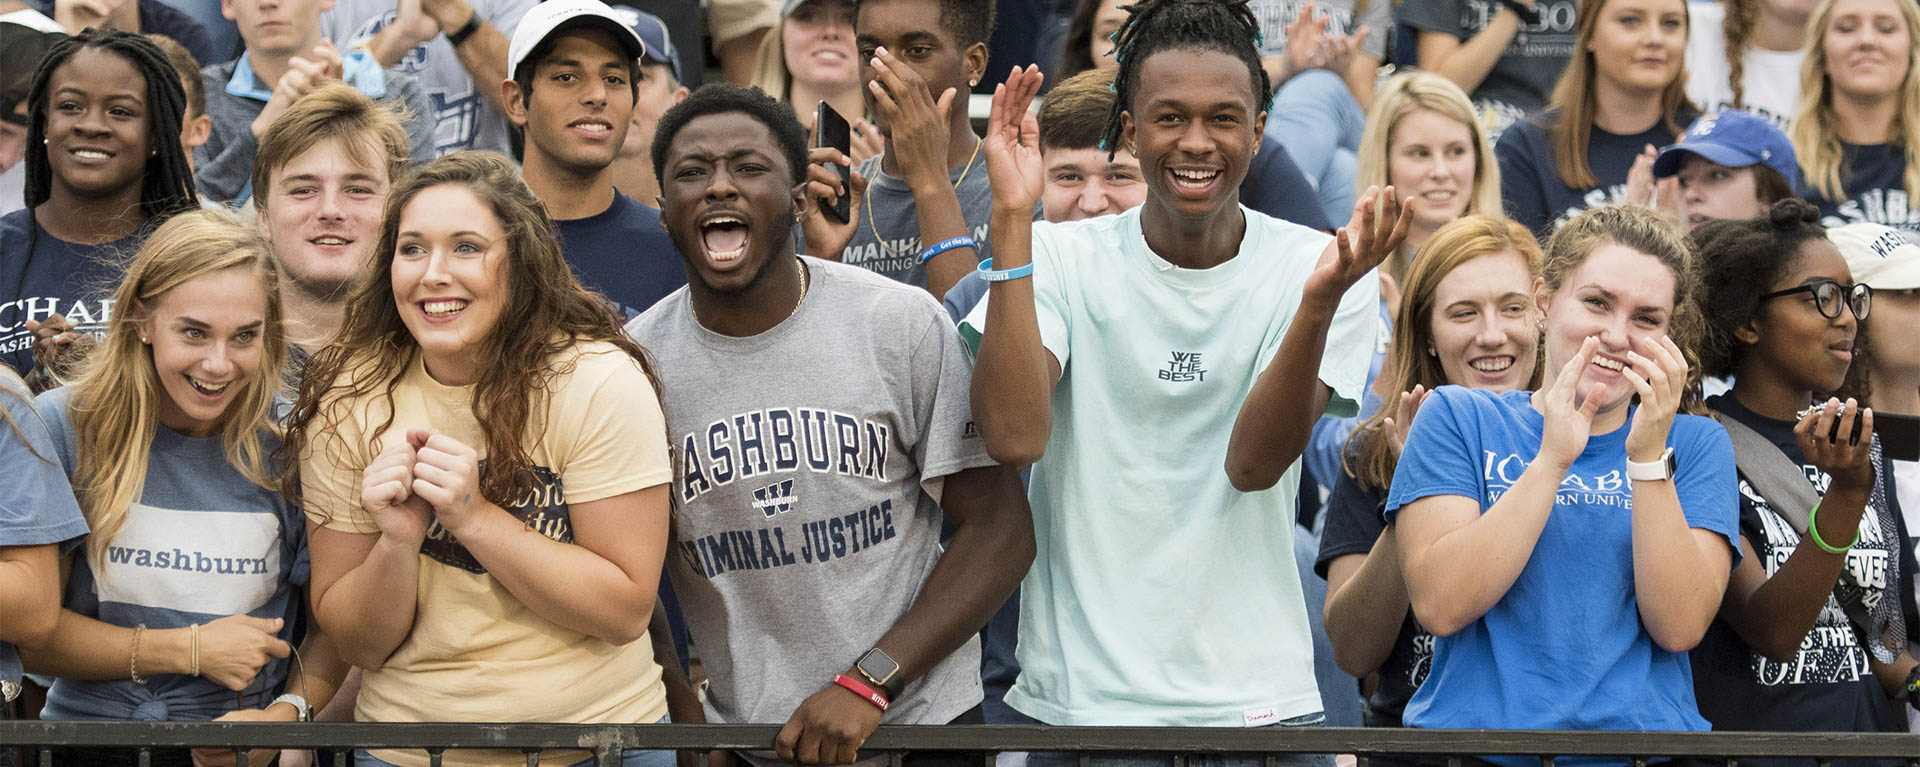 Students cheer during a Washburn football game